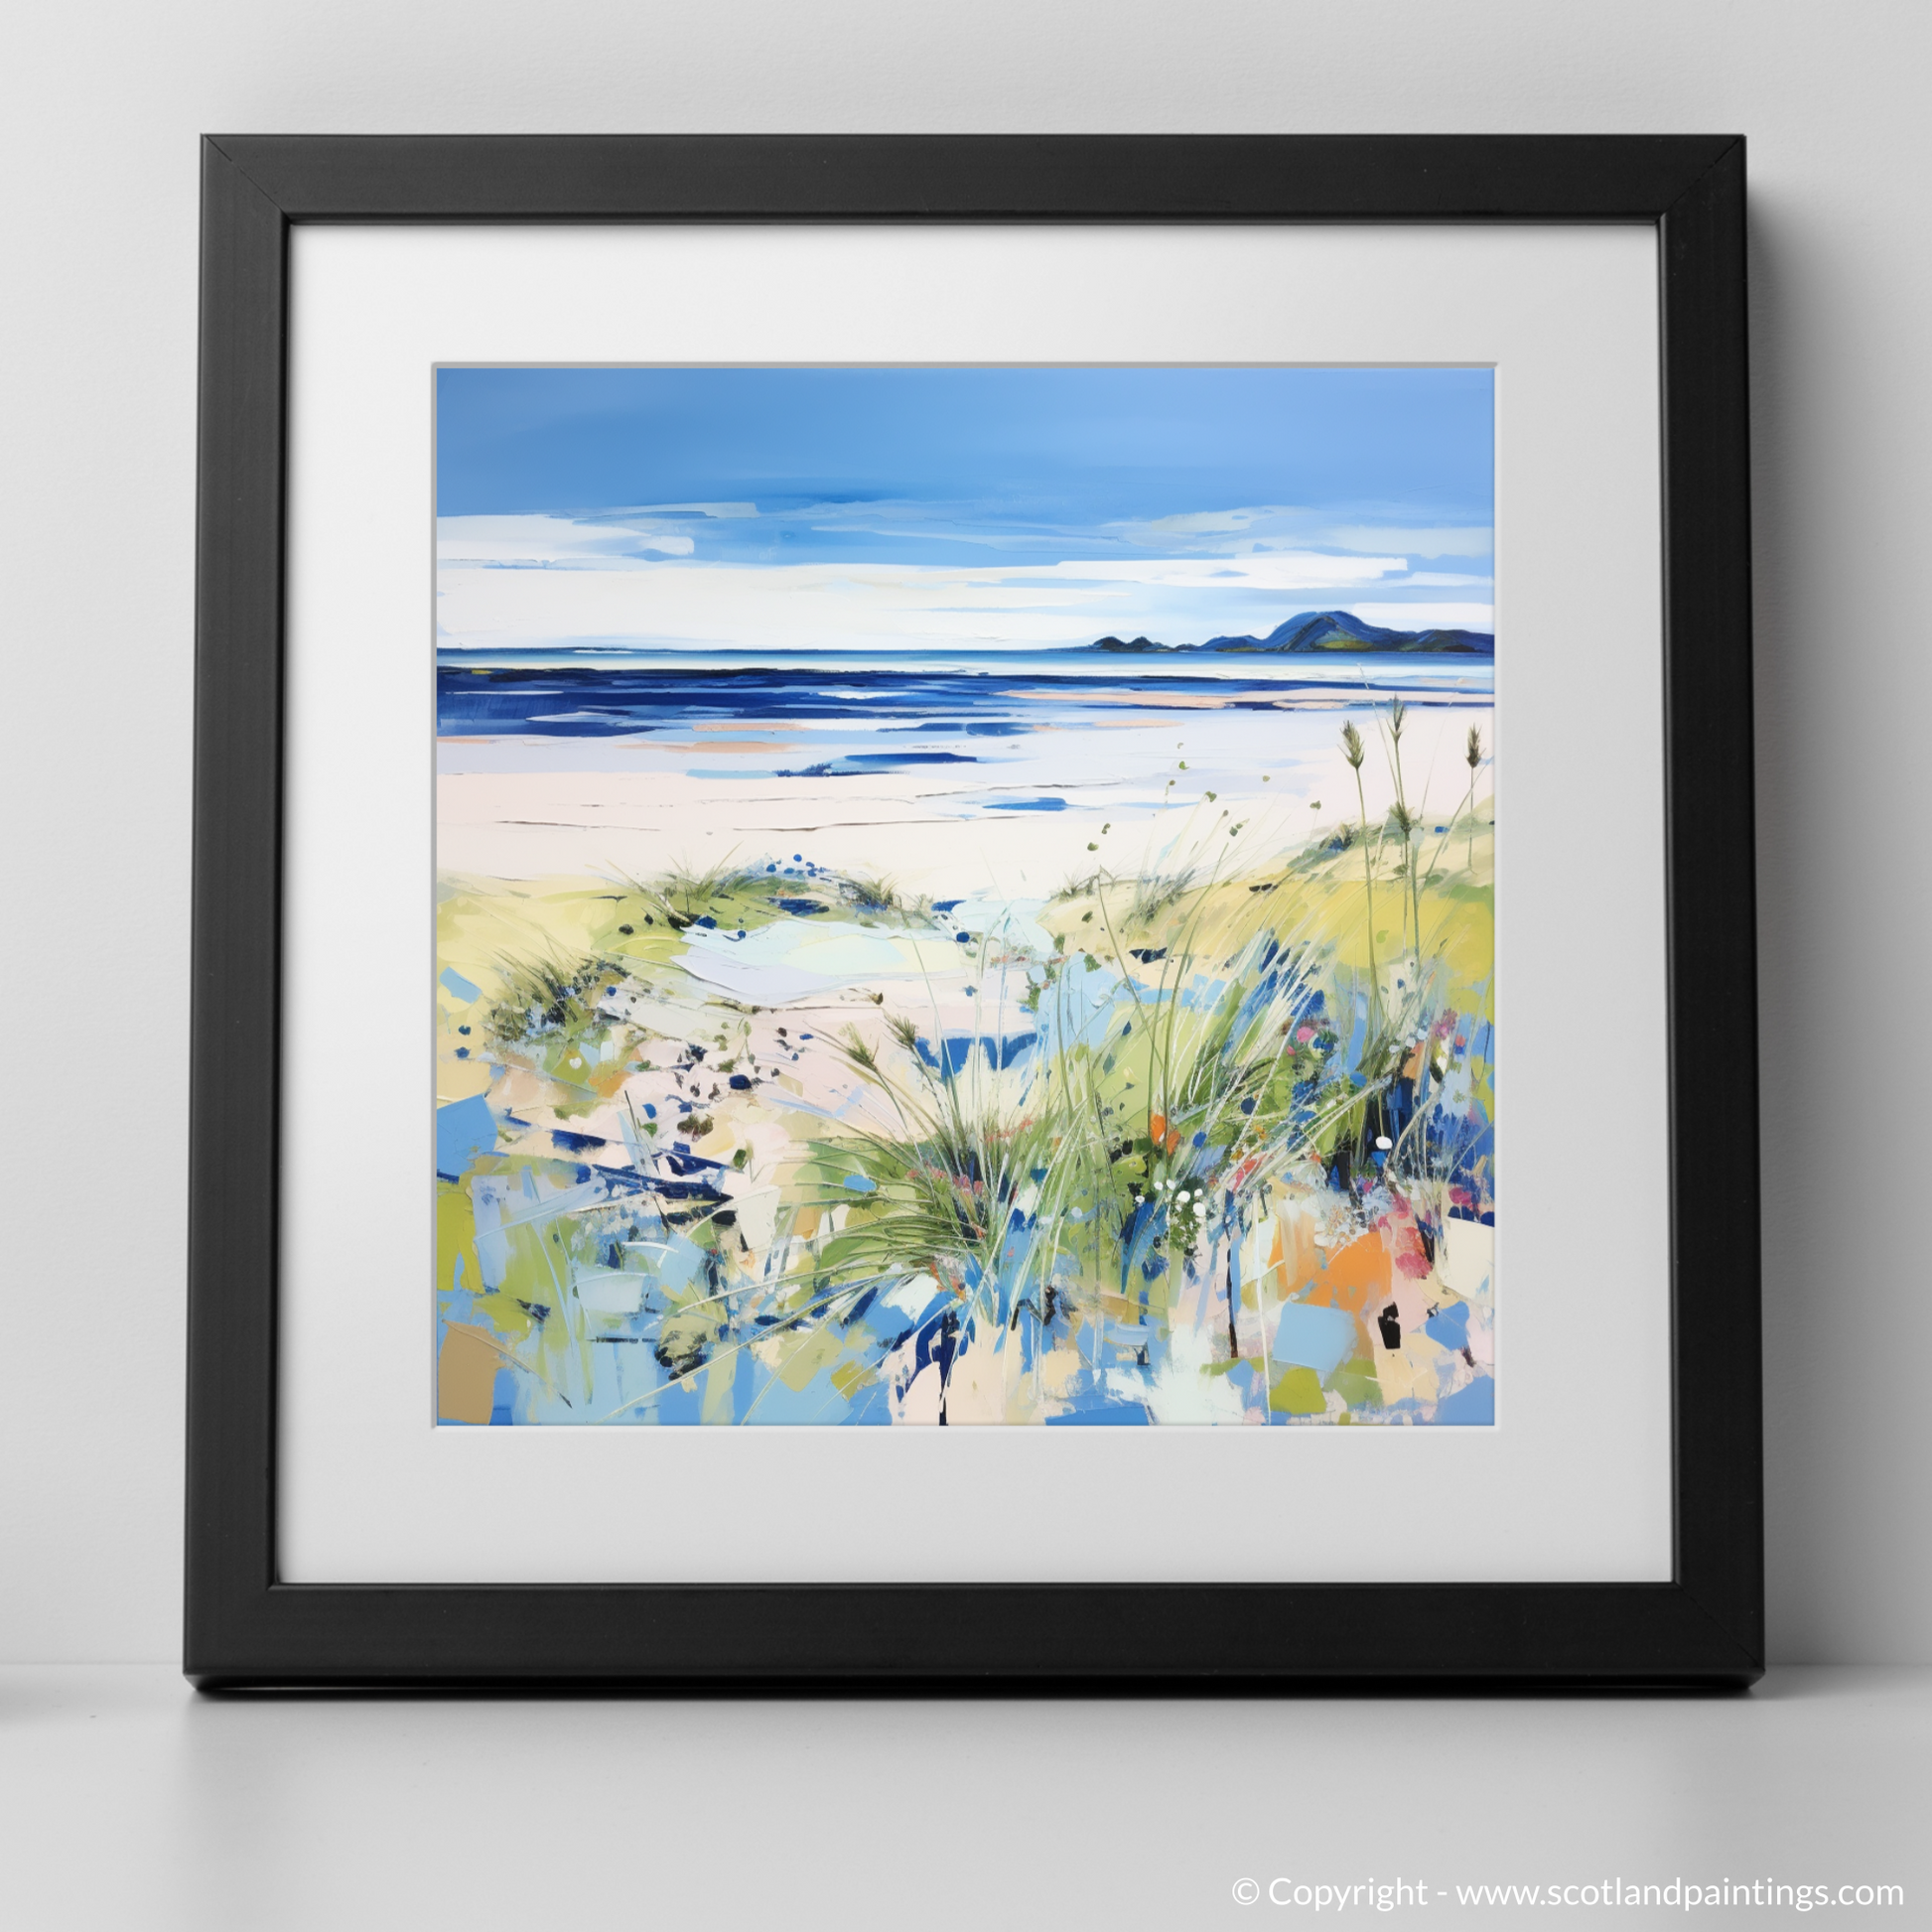 Art Print of Longniddry Beach, East Lothian in summer with a black frame